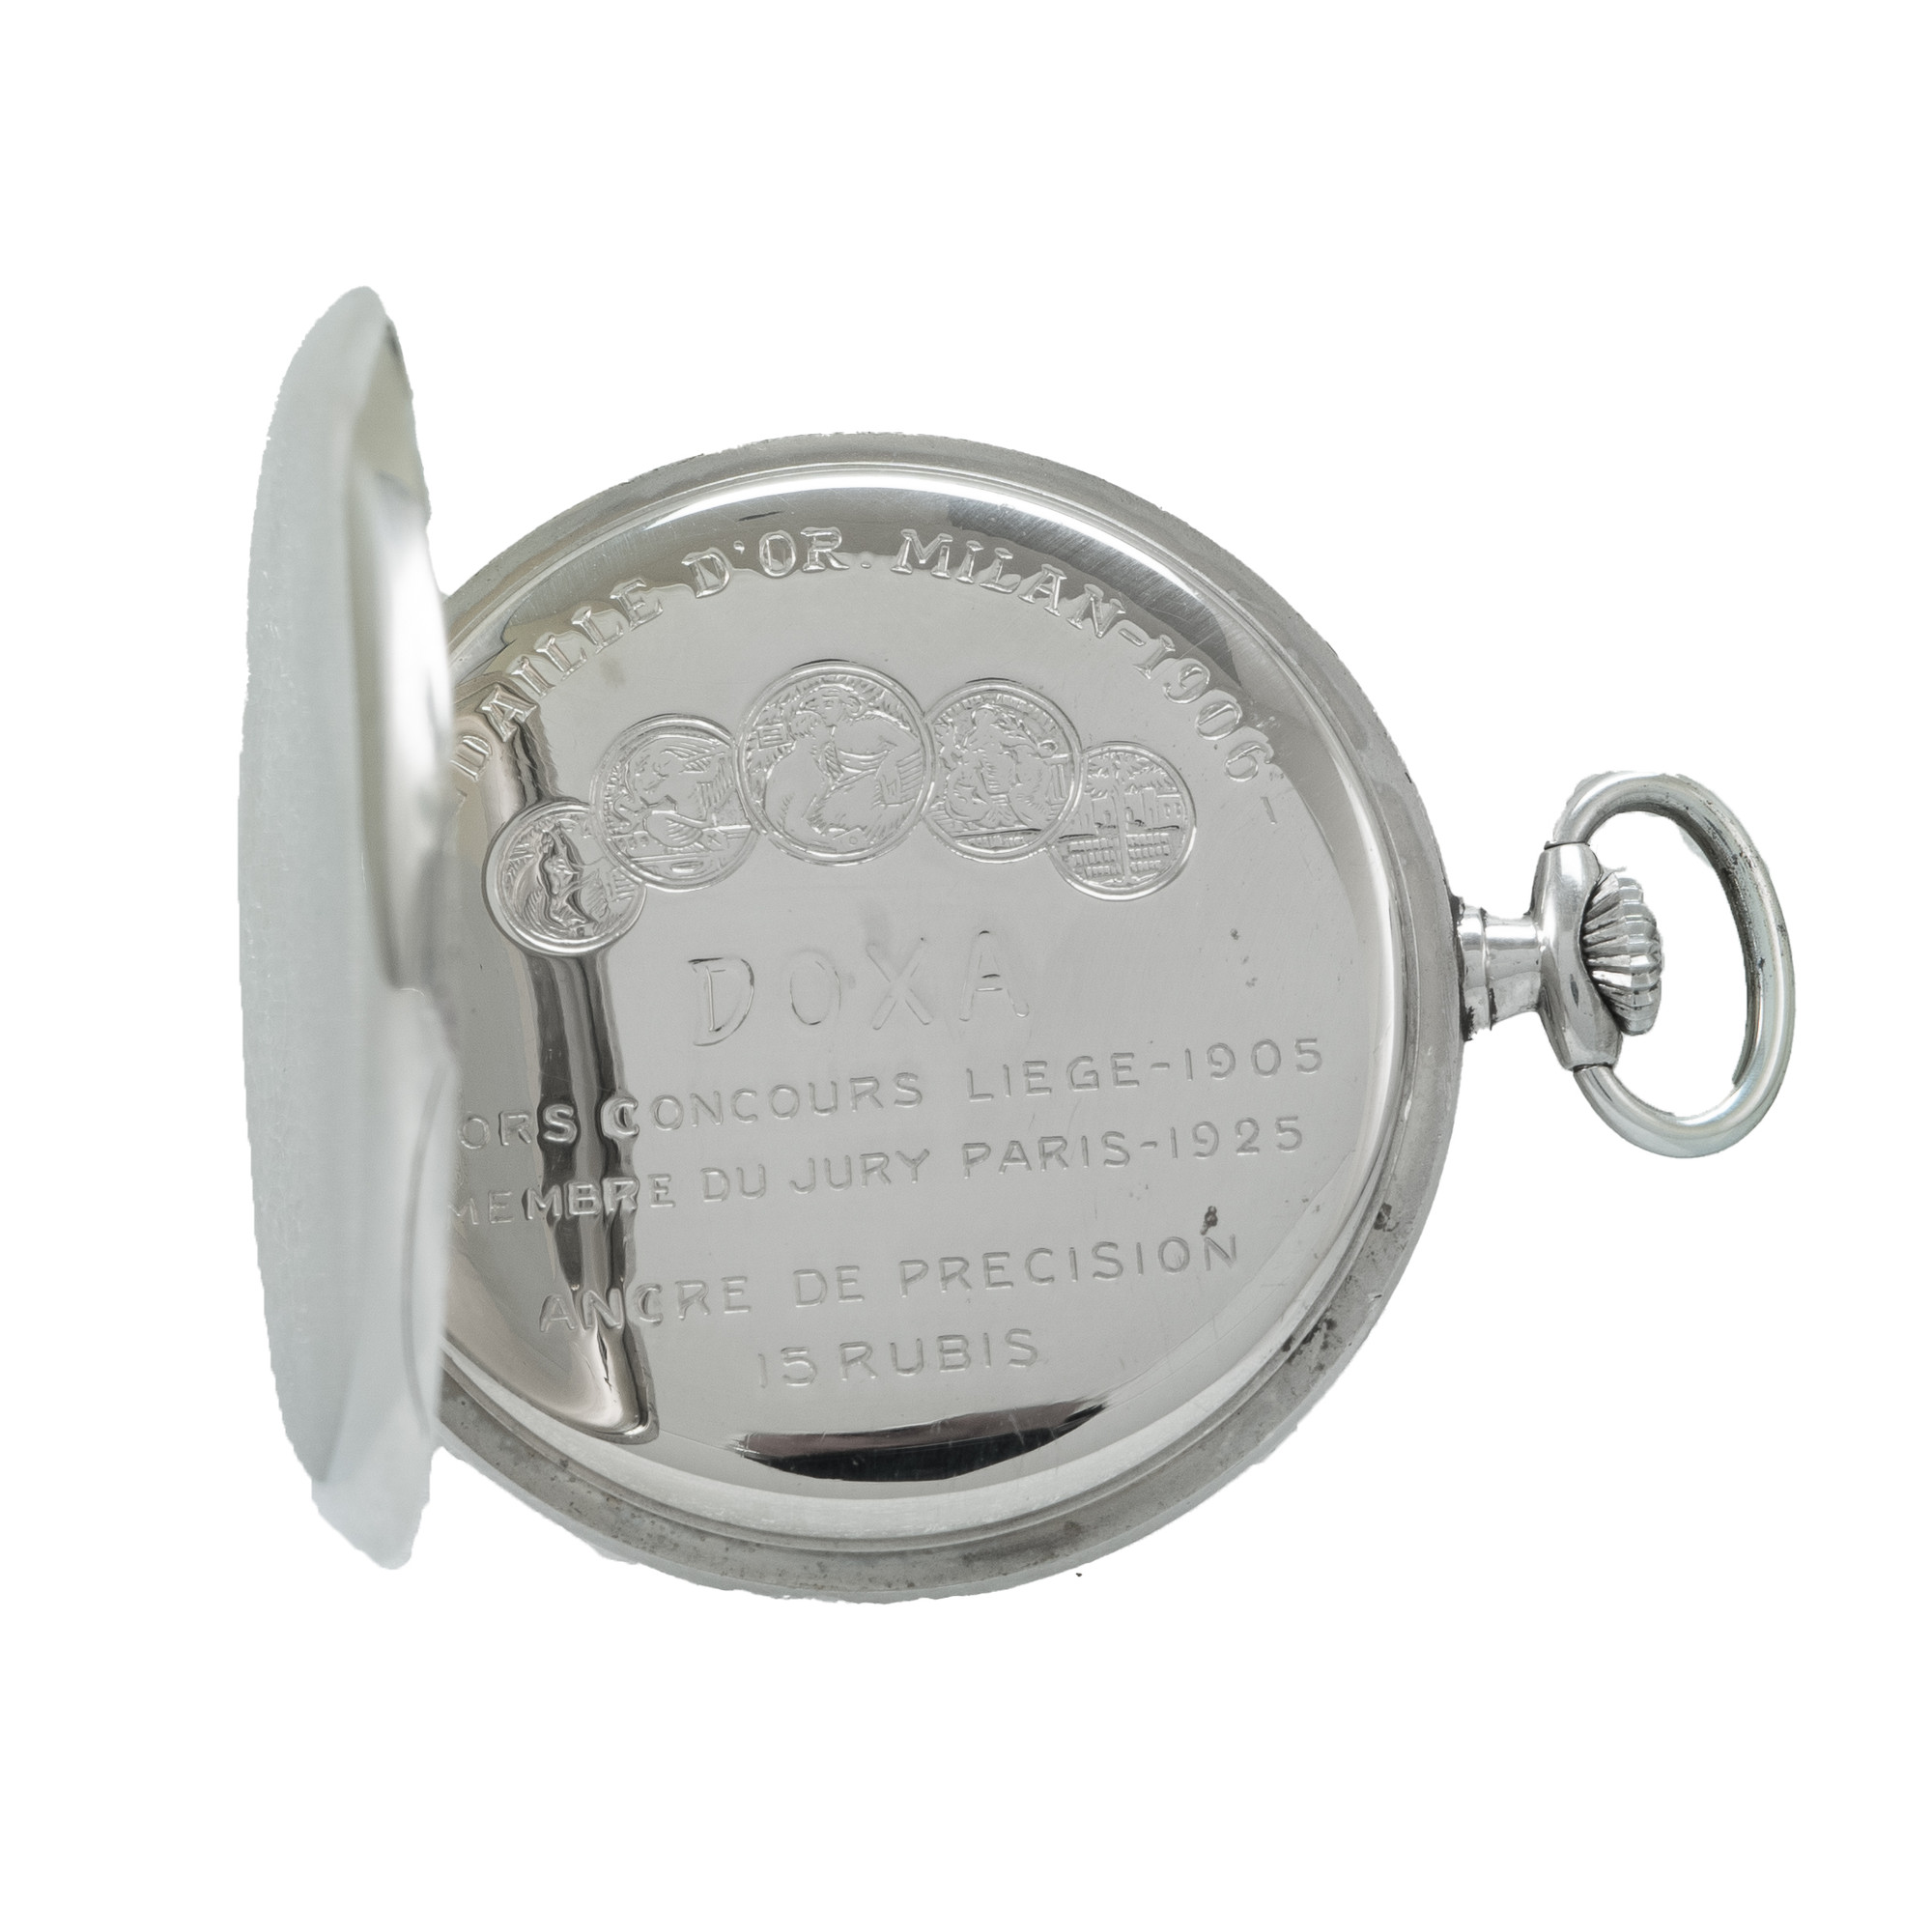 Doxa Pocket Watch in Silver Case Early 1900's - Inventory 5069